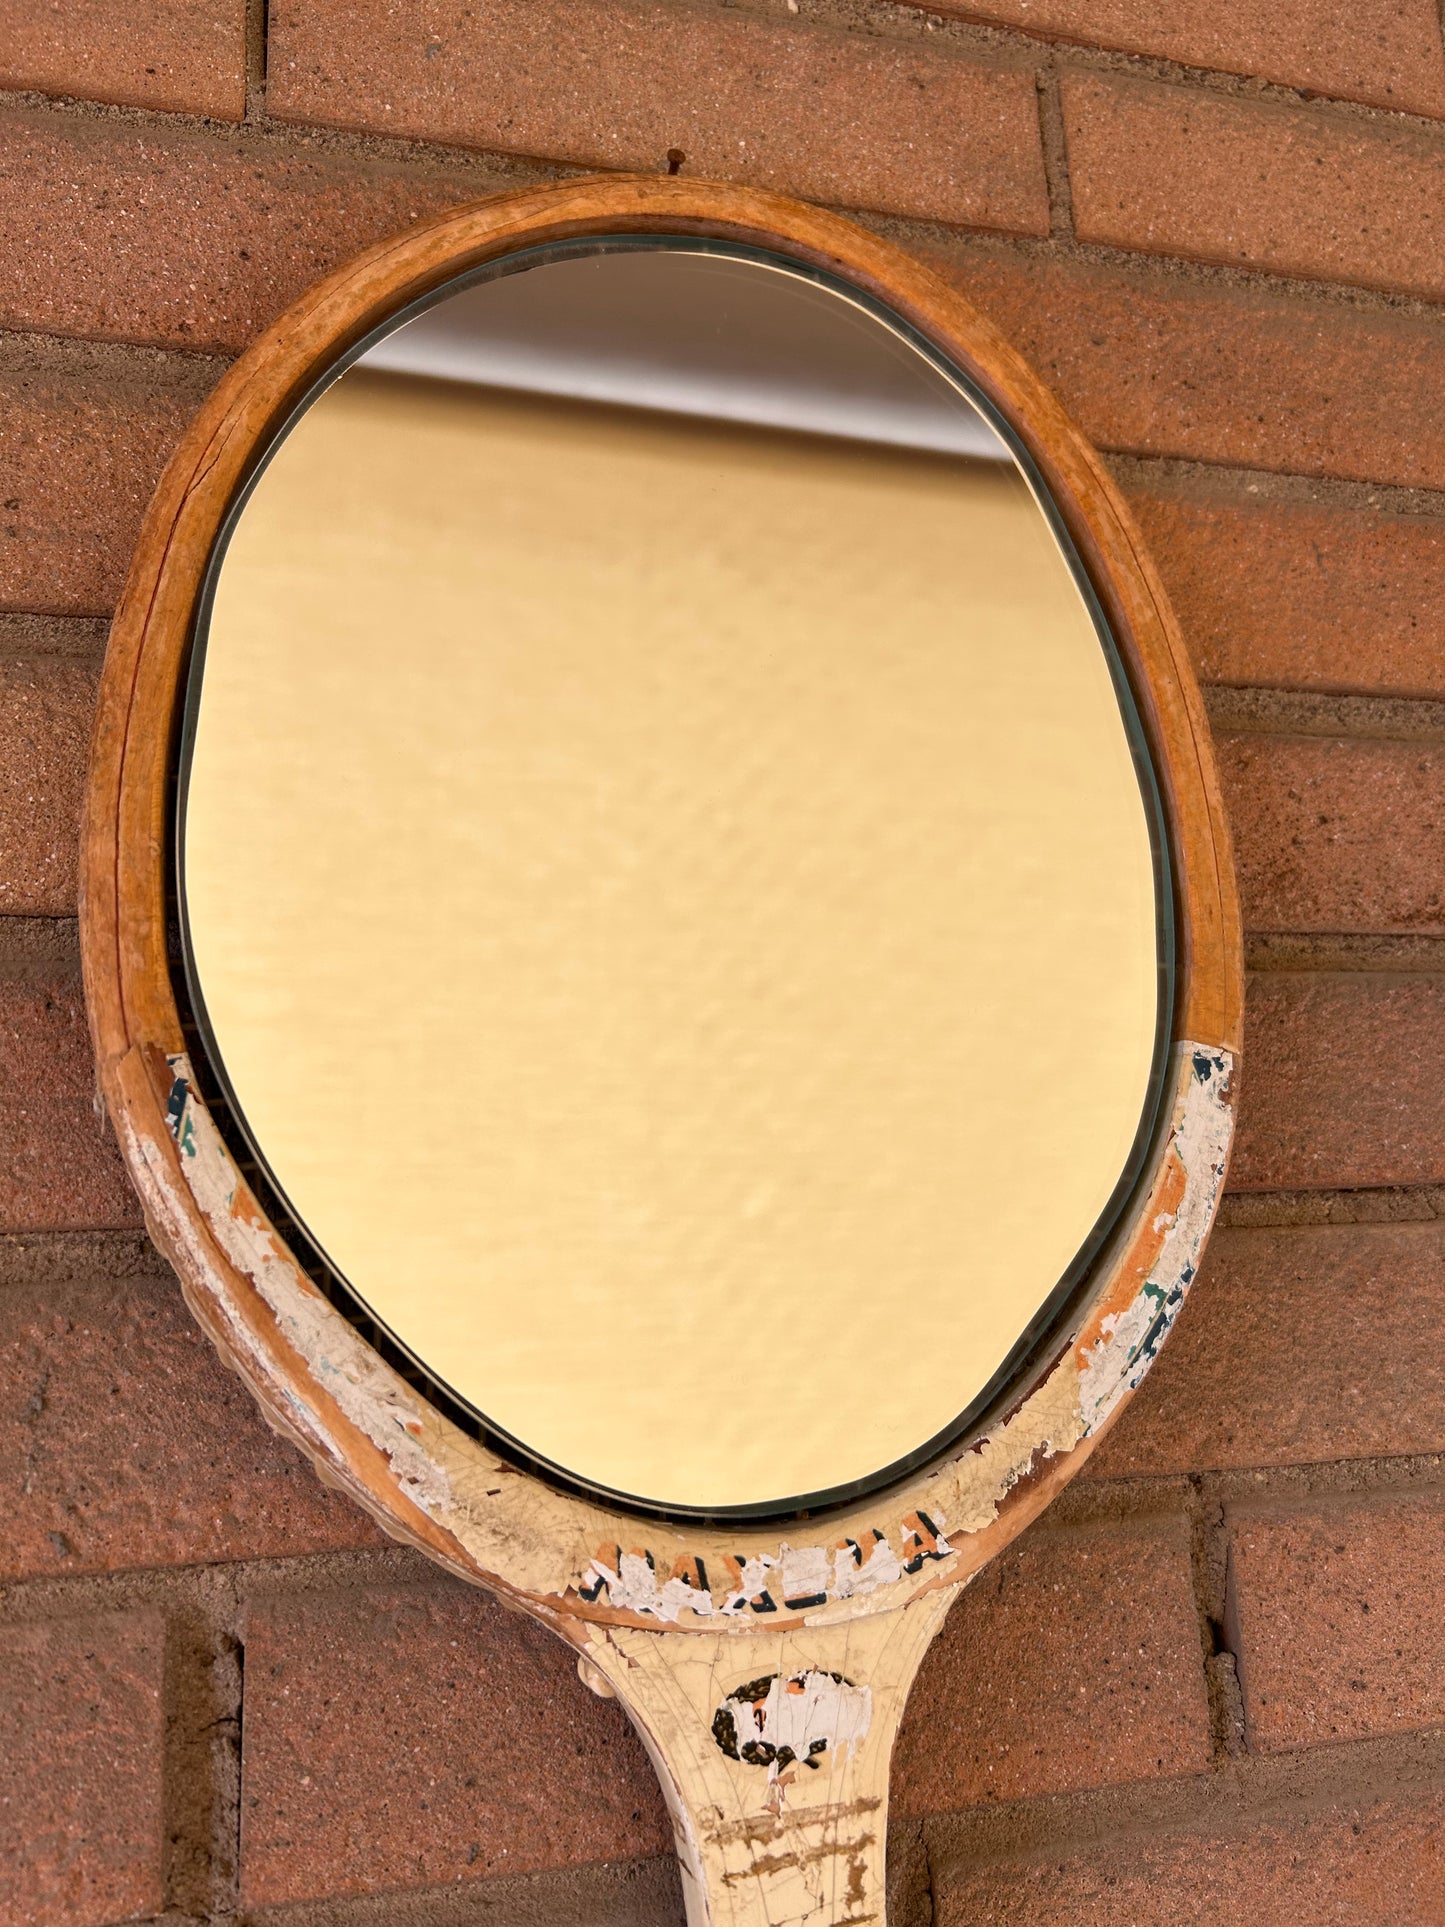 Racchetta da Tennis Vintage Maxima in Legno con Specchio- Vintage Mirror wood Racket